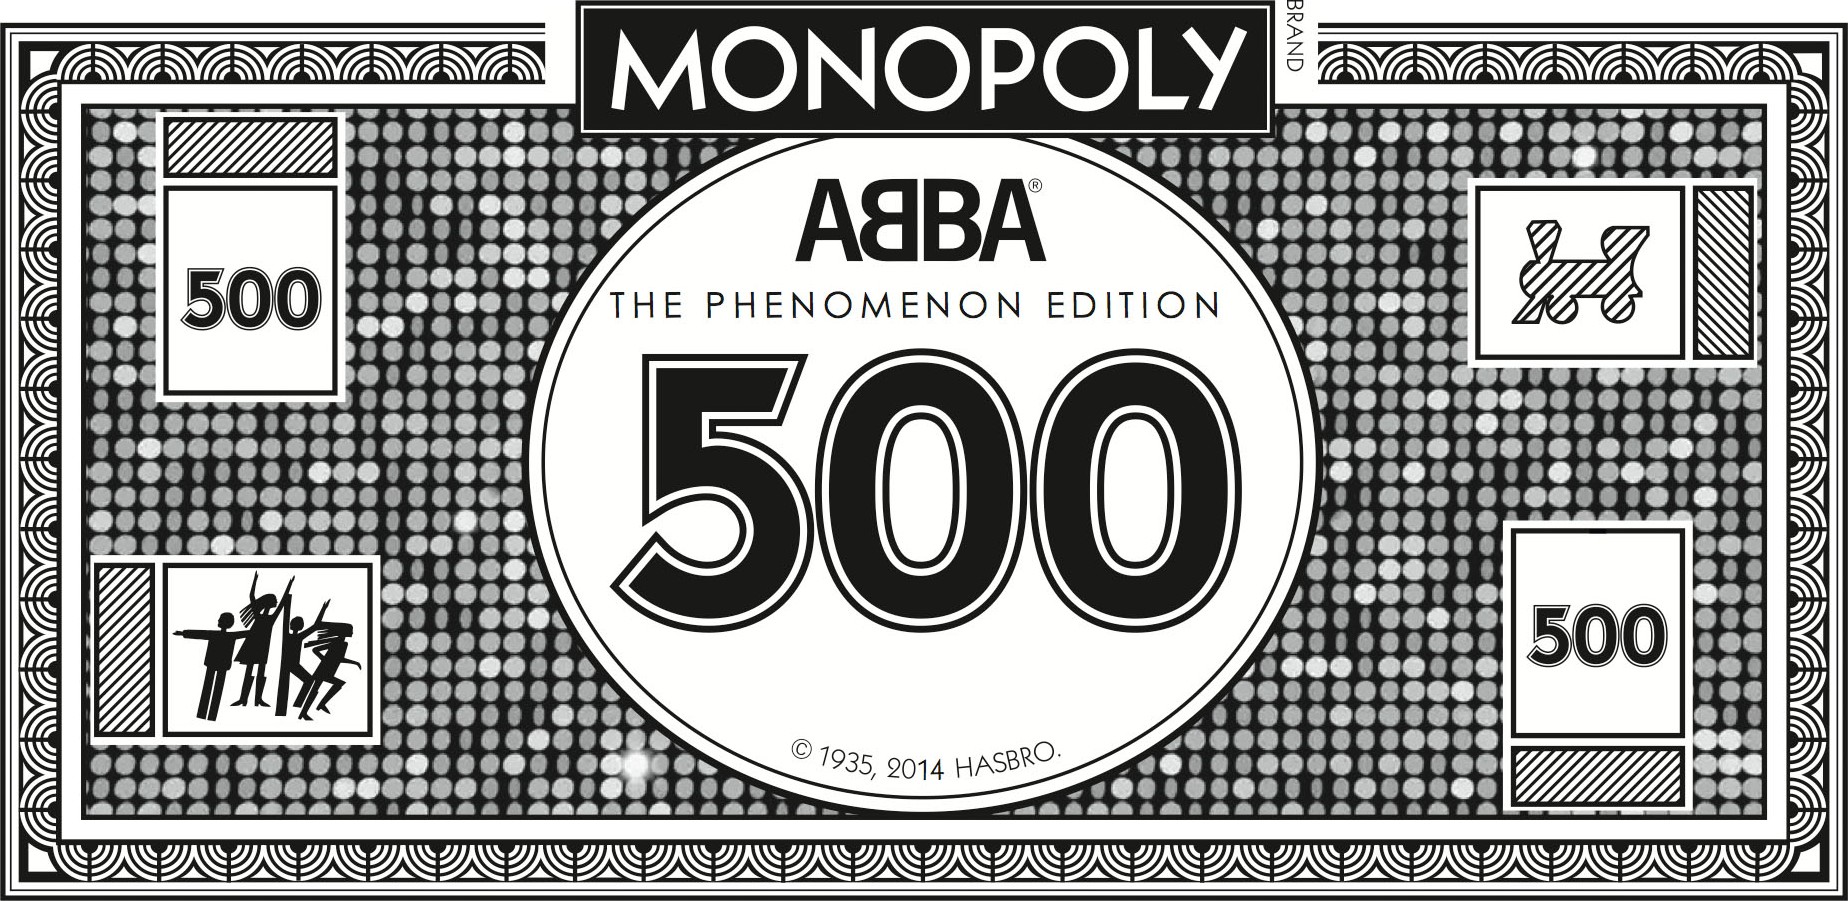 Billets du Monopoly ABBA